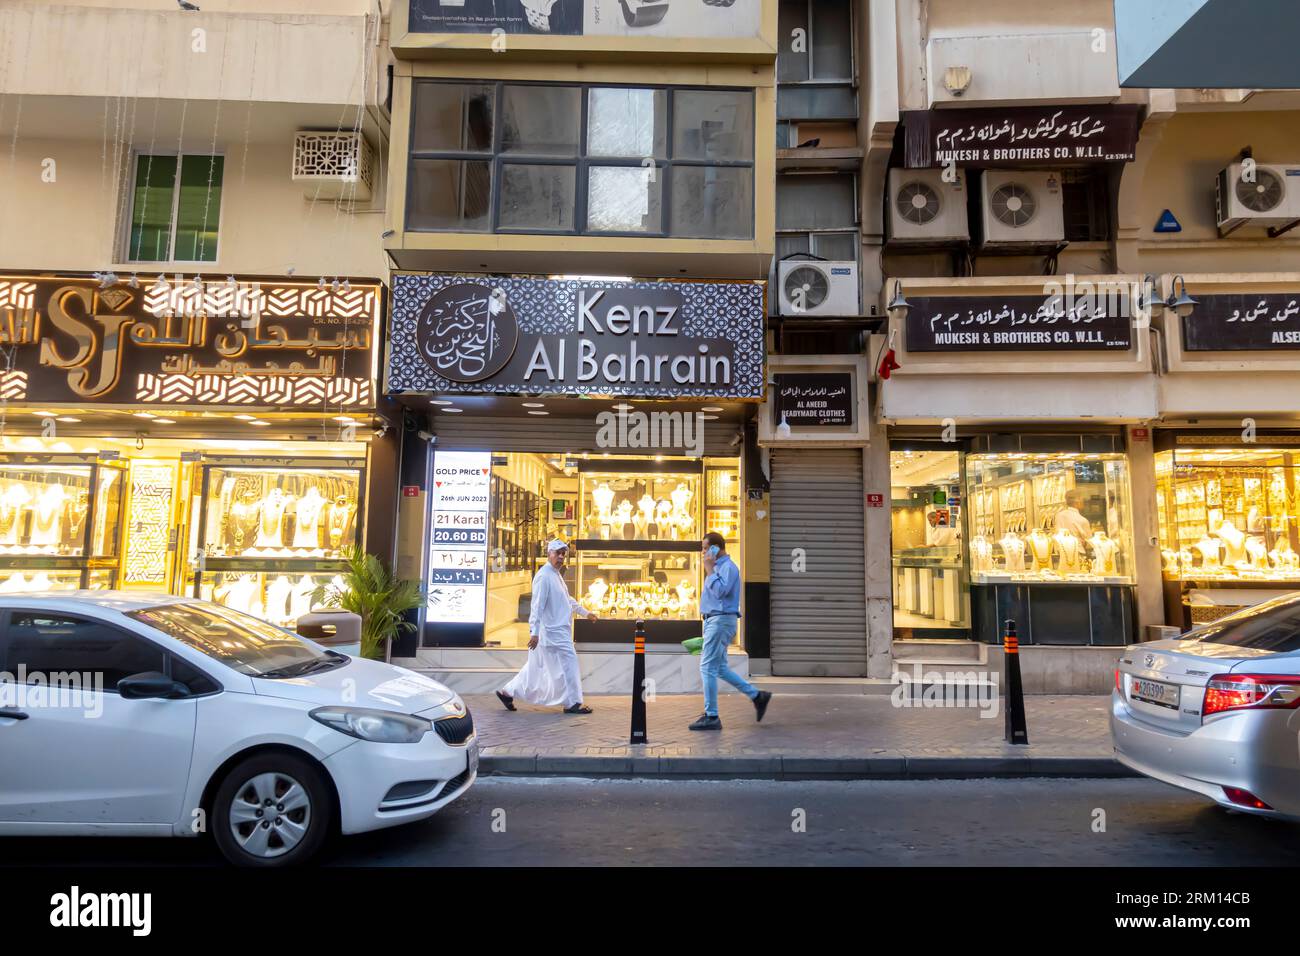 Gold souk Manama Bahrain. Kenz Al Bahrain Jewellers shop Stock Photo